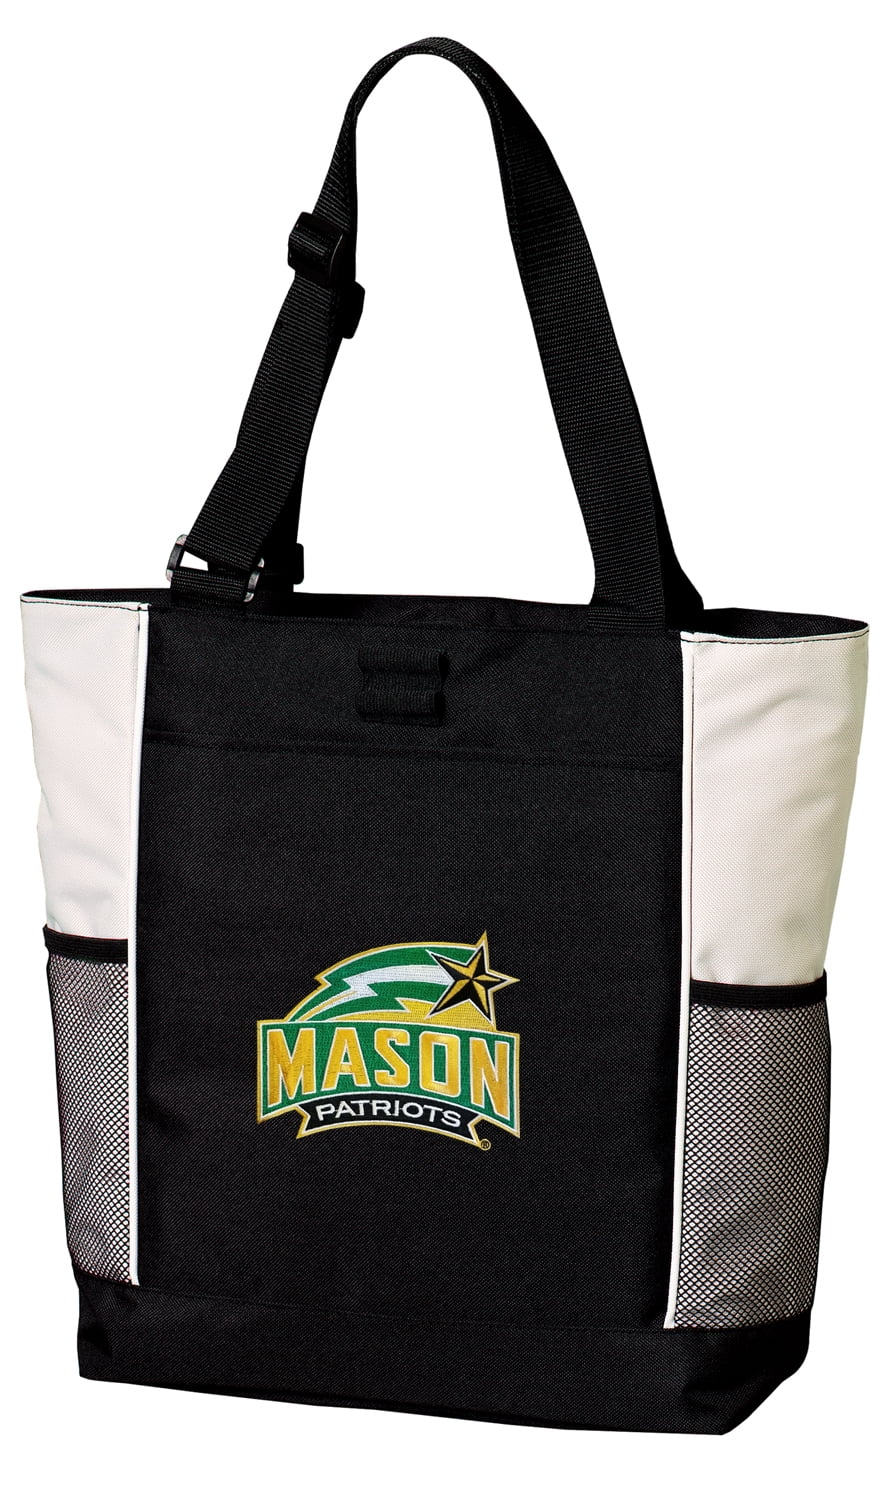 Broad Bay Jumbo GMU Tote Bag or Large Canvas George Mason University Shopping Bag